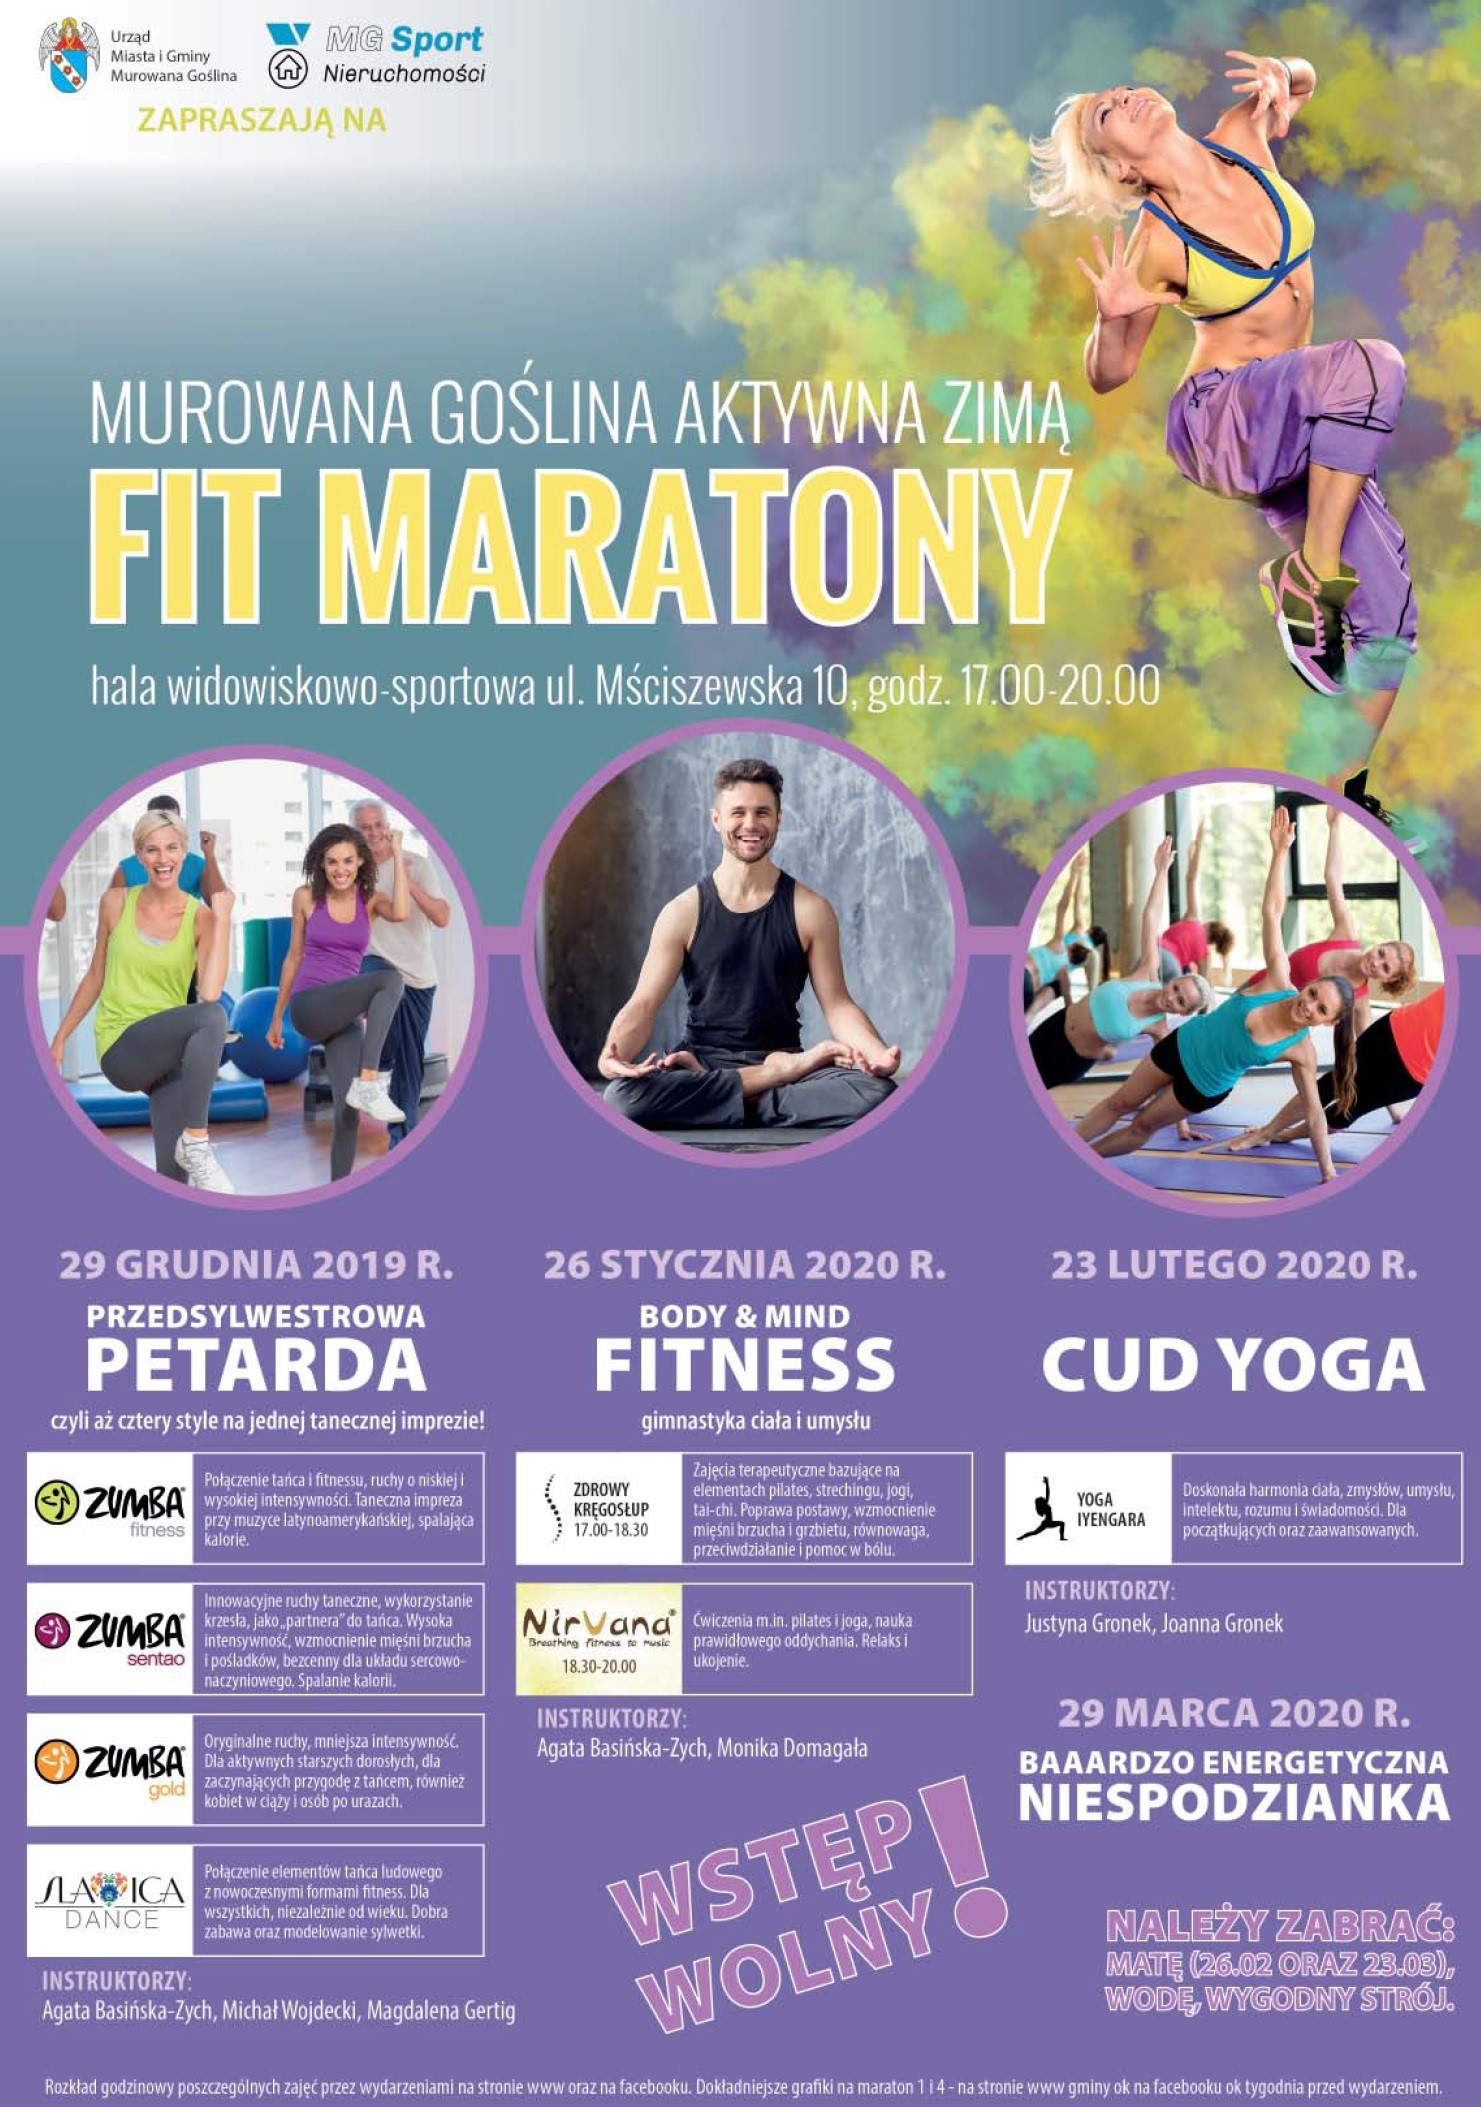 Fit Maratony - Cud Yoga